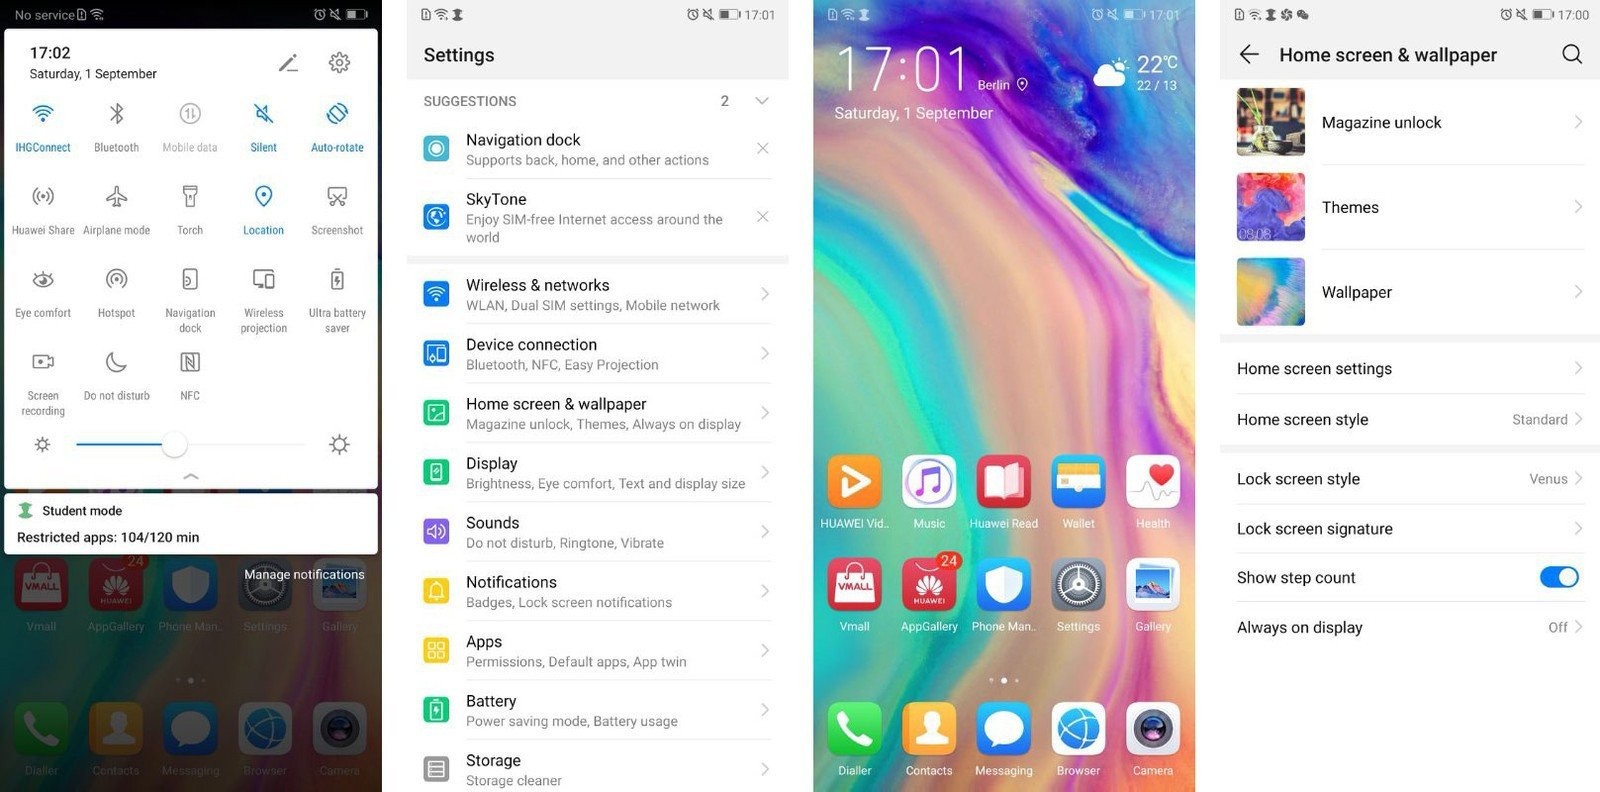 EMUI 9.0: Επίσημο το νέο περιβάλλον χρήσης της Huawei βασισμένο στο Android 9.0 Pie [Screenshots]